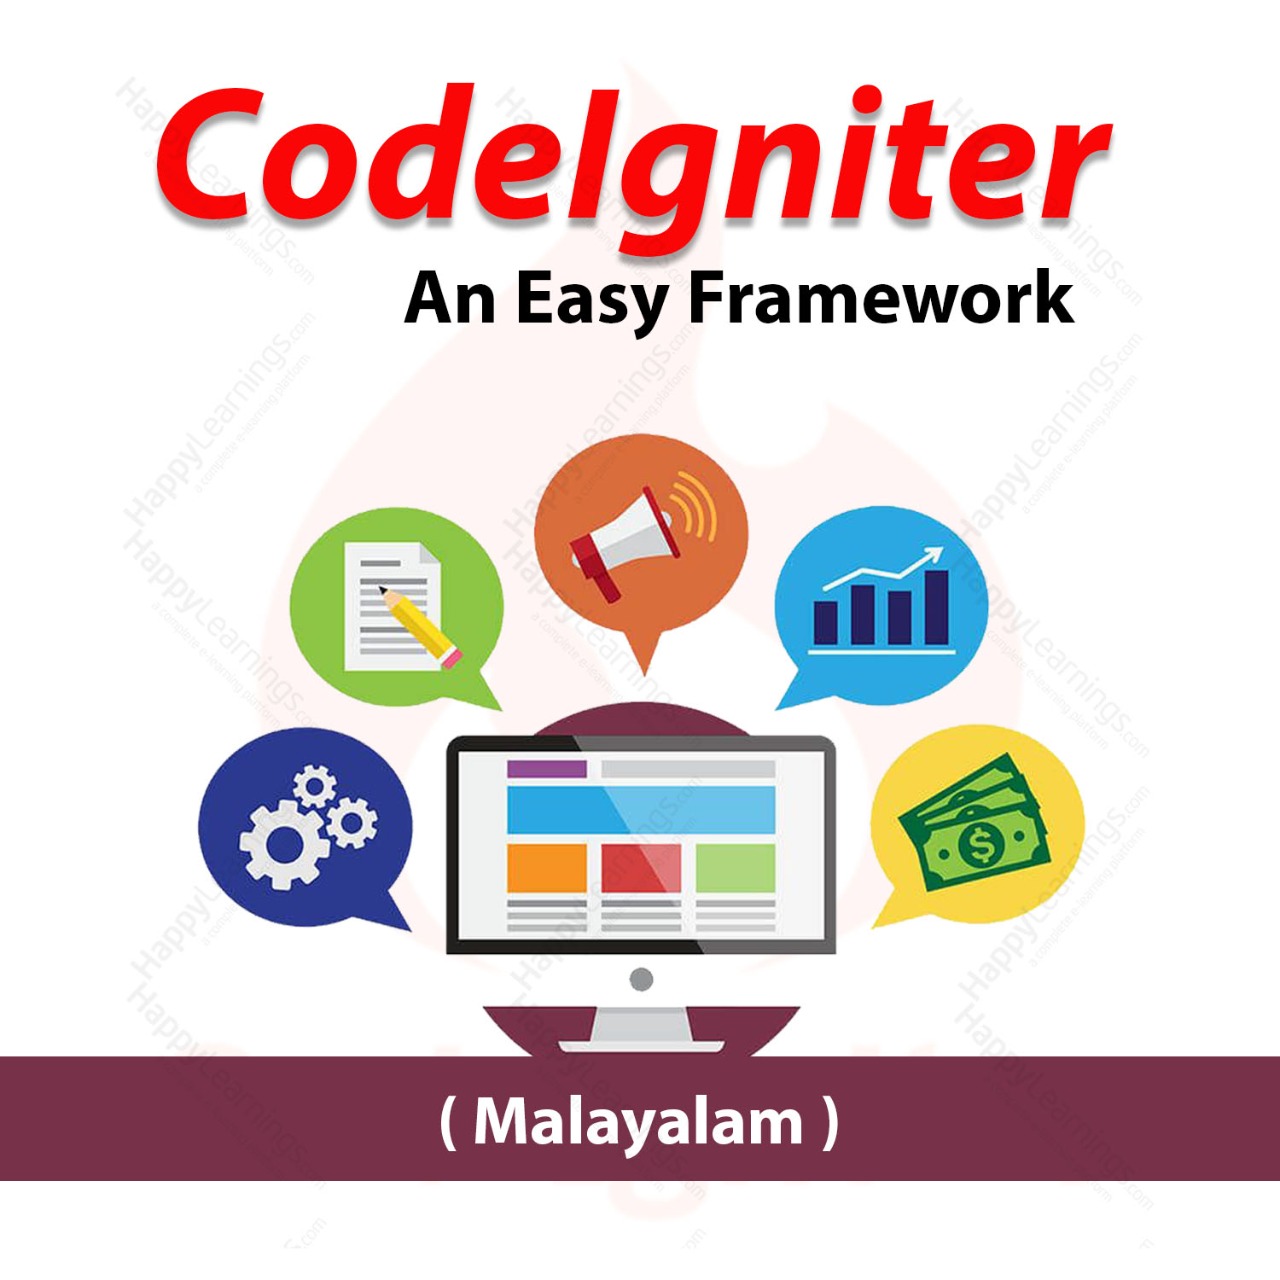 CodeIgniter: An Easy Framework